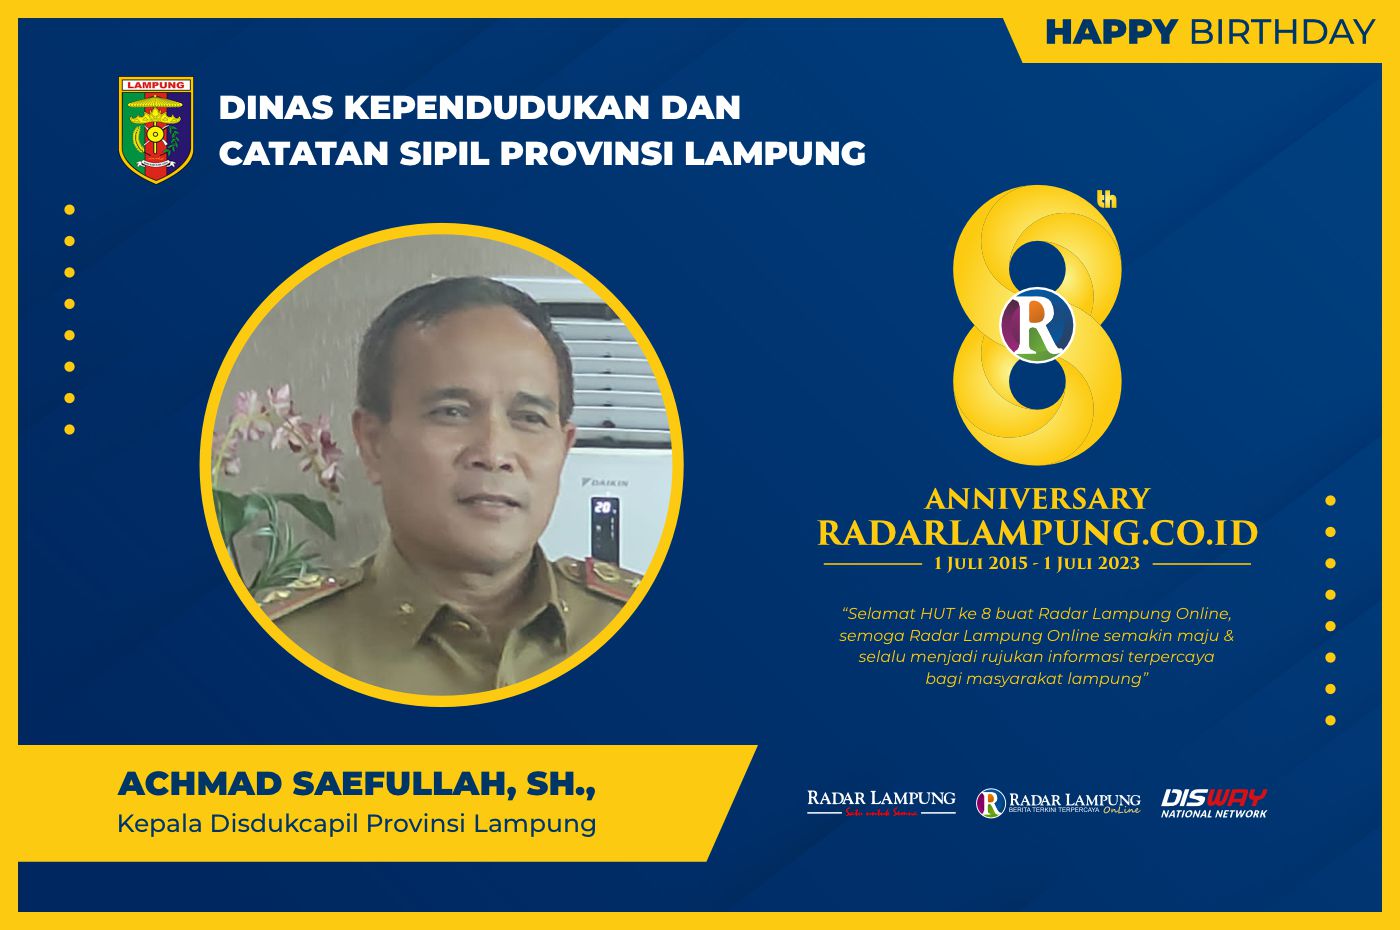 Achmad Saefullah: Selamat HUT ke-8 Radar Lampung Online